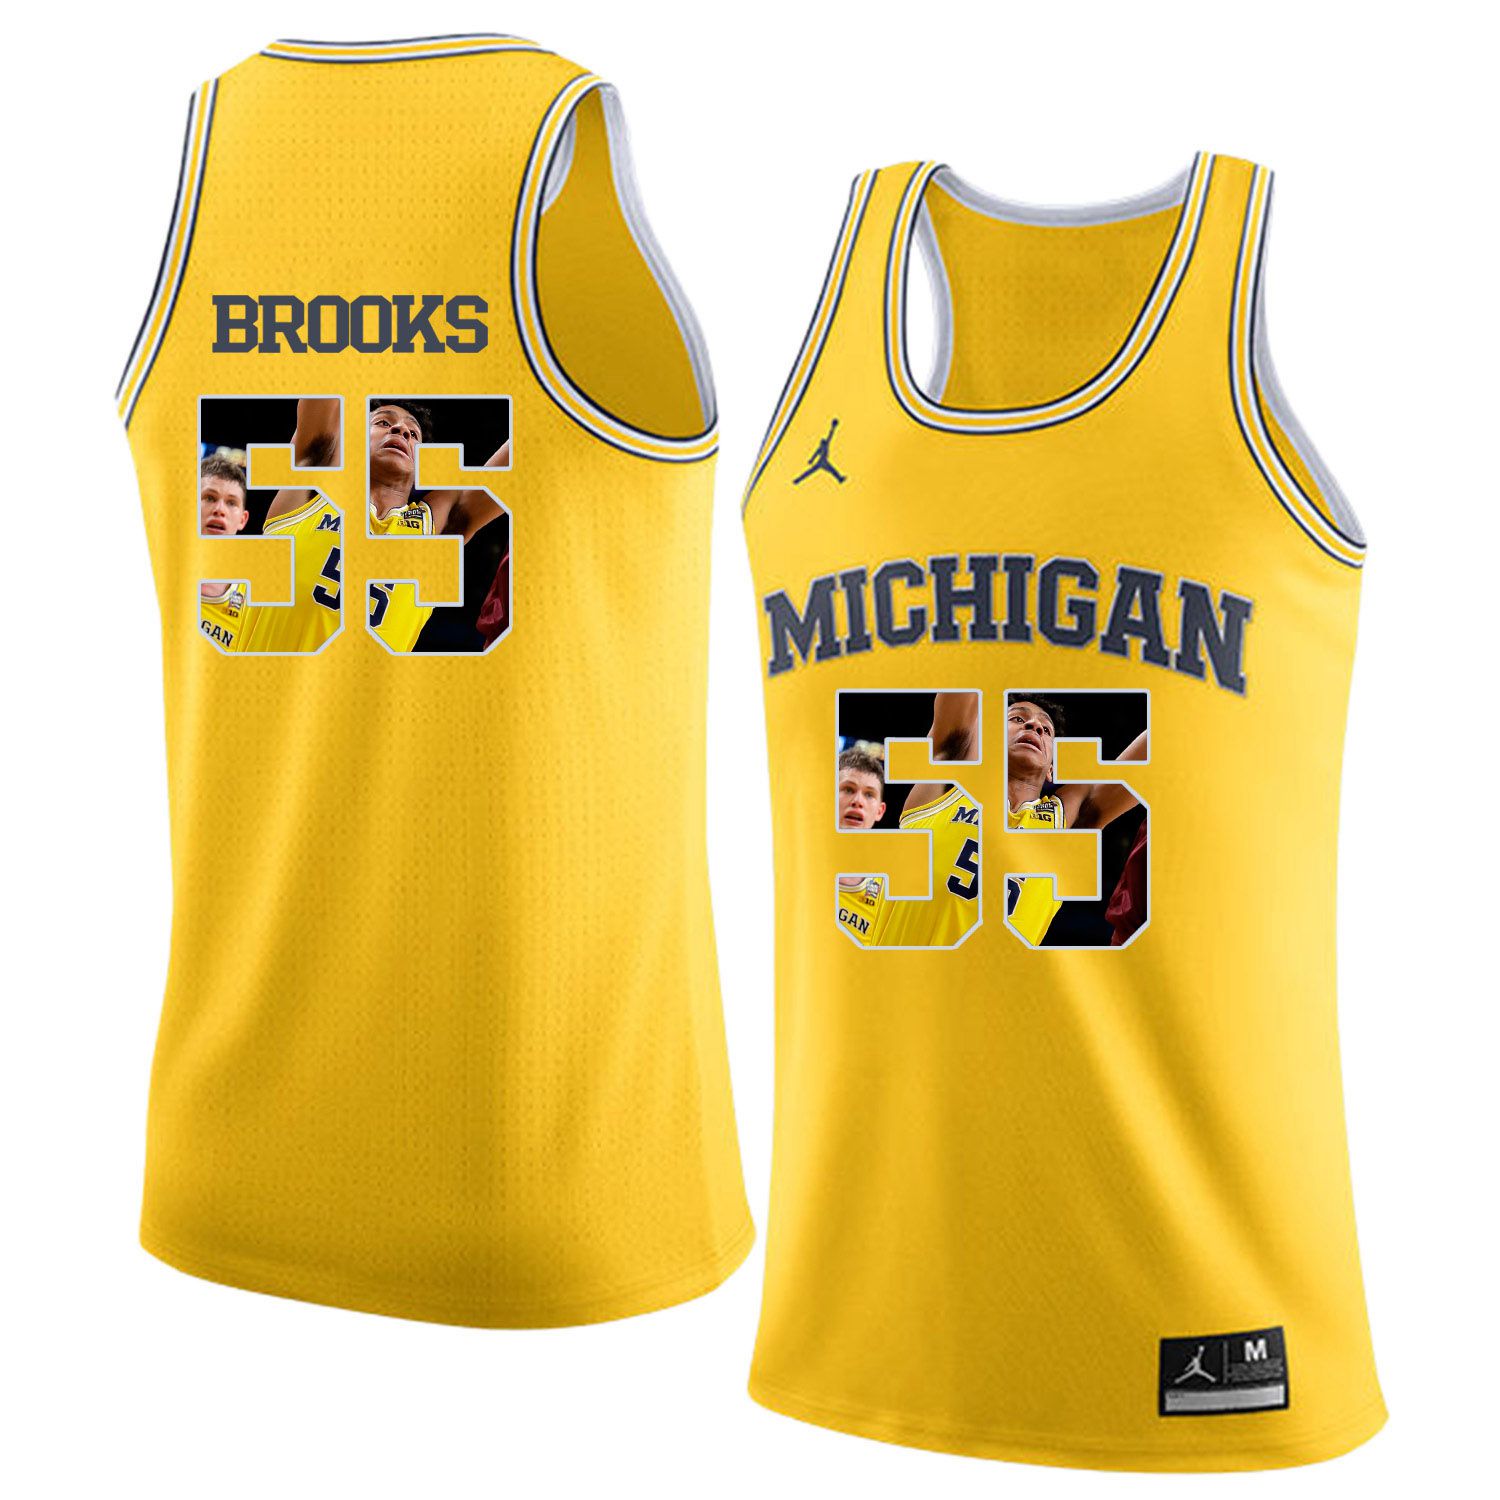 Men Jordan University of Michigan Basketball Yellow 55 Brooks Fashion Edition Customized NCAA Jerseys